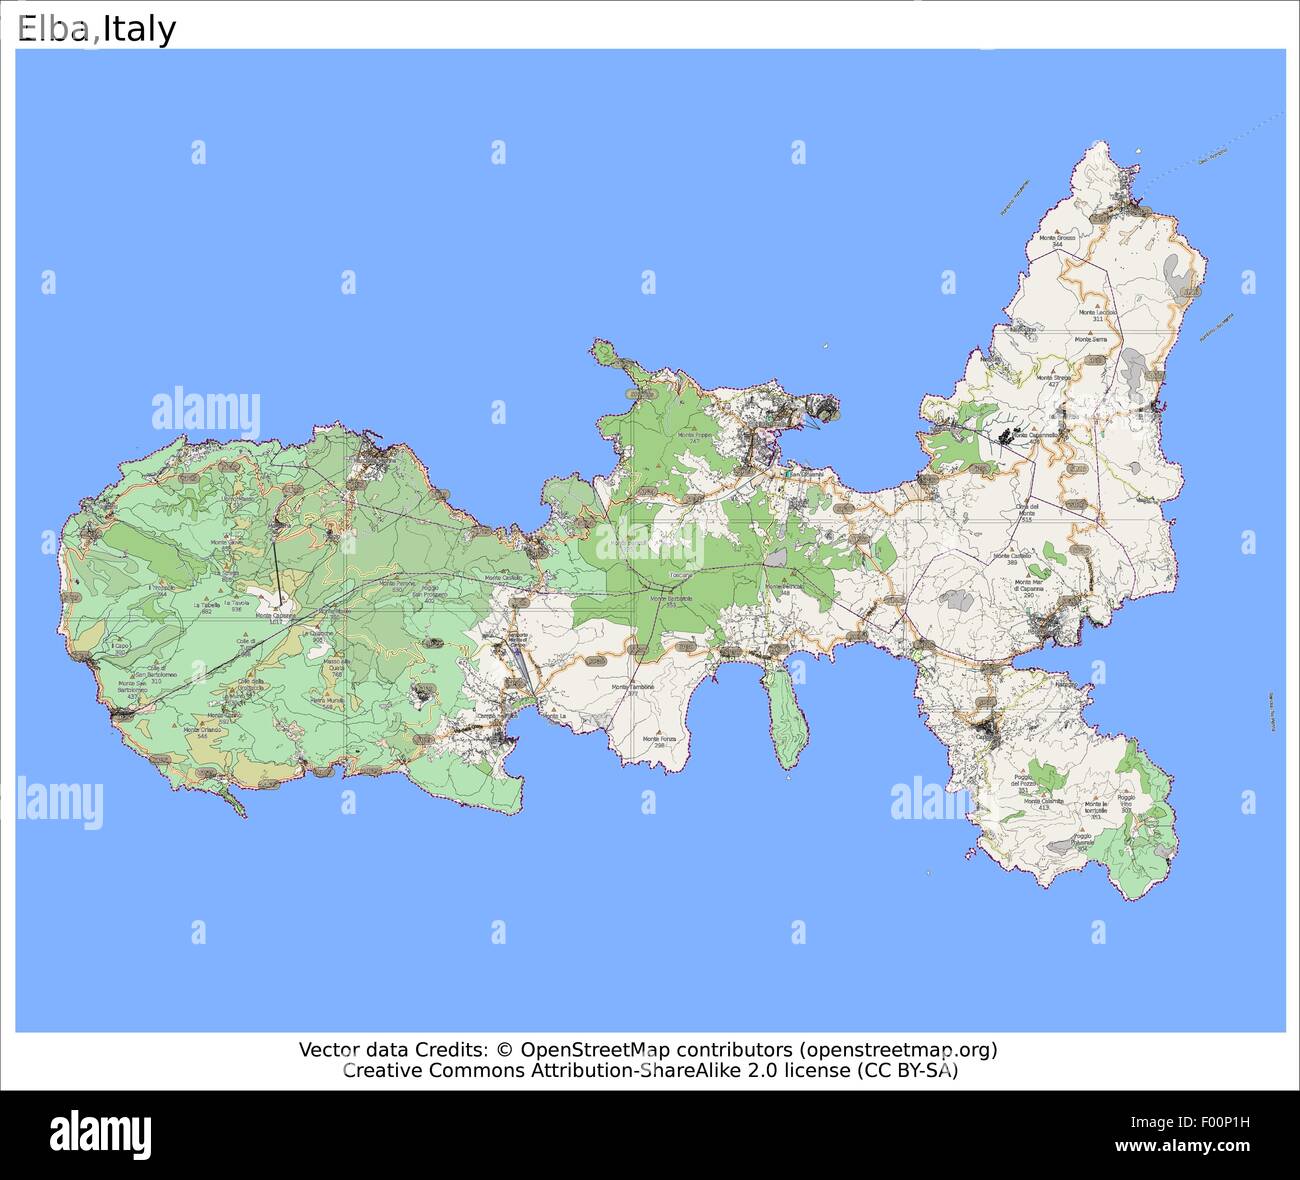 Elba island Italy Country city island state location map Stock ...